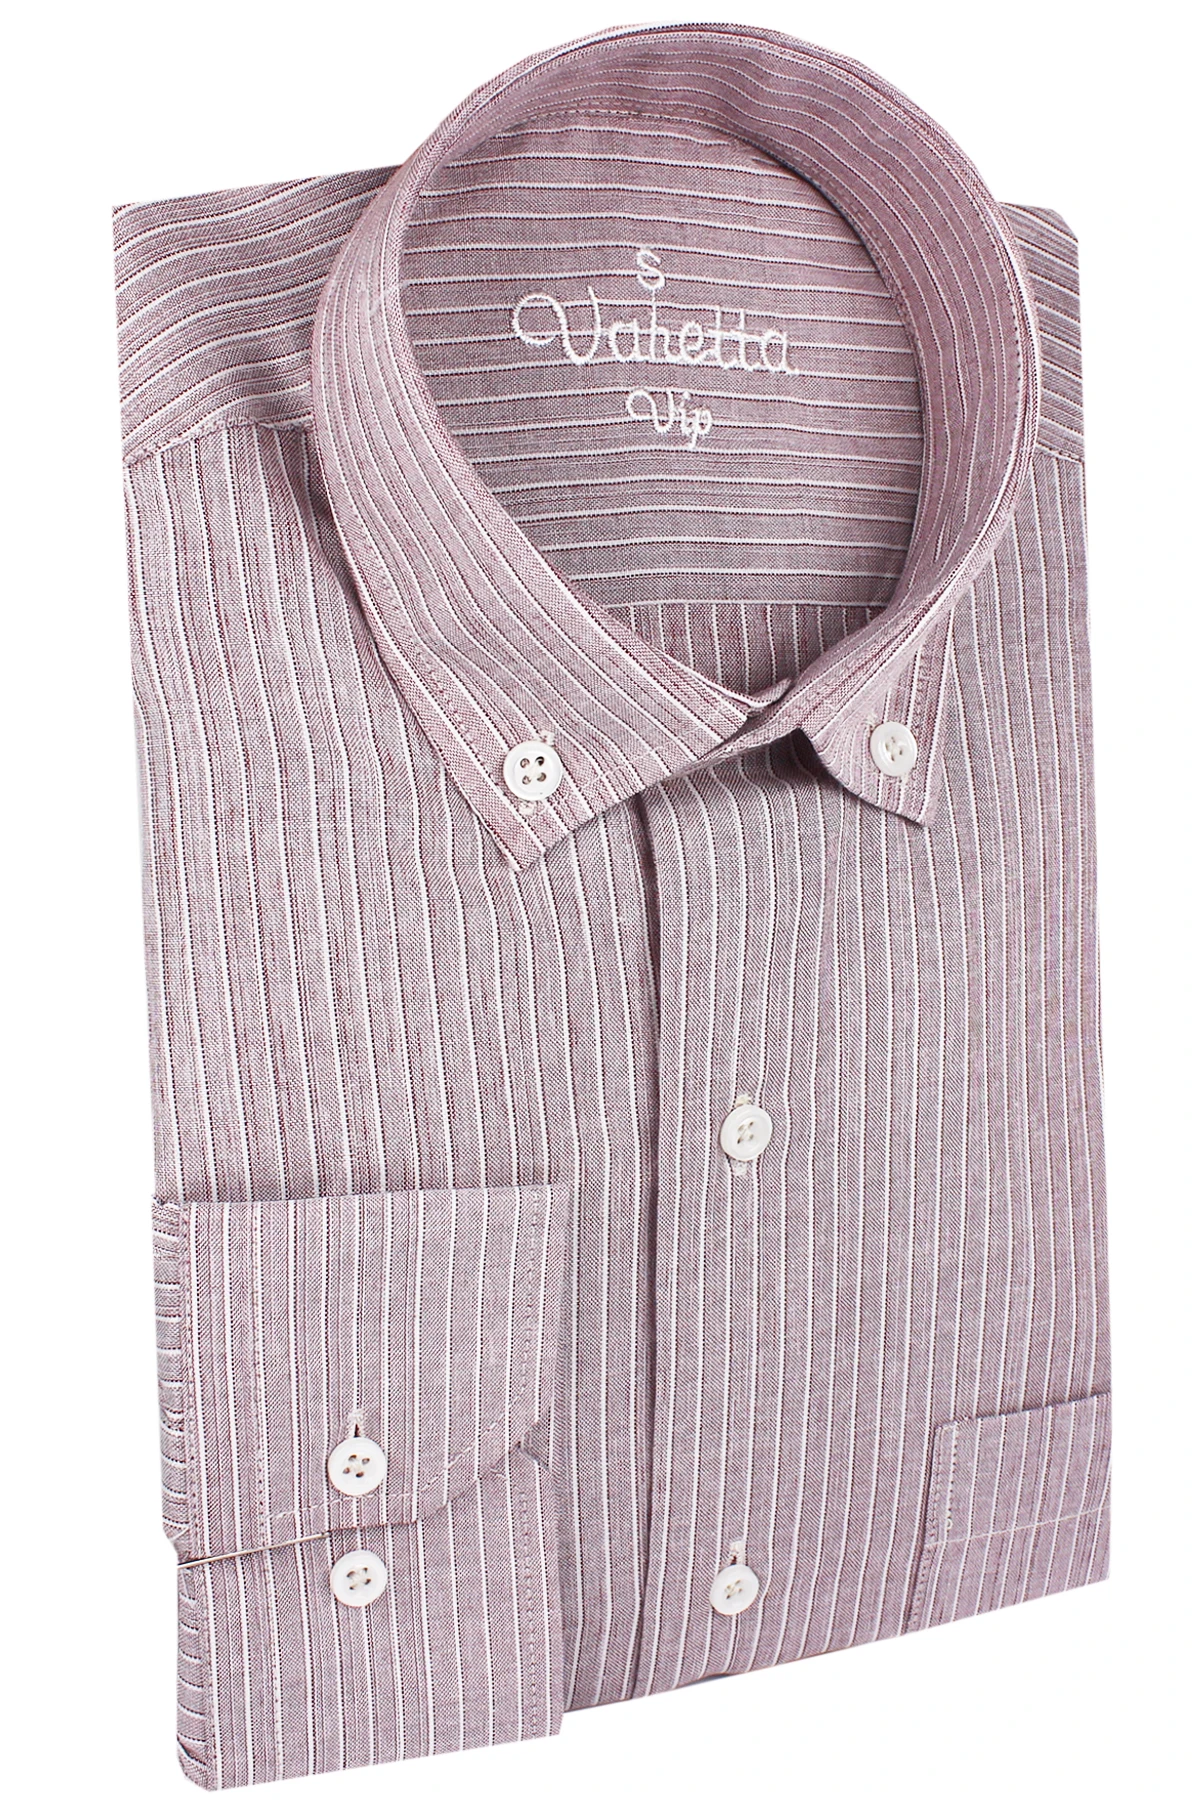 Men's Oxford Cotton Fashion Stripe Casual Long Sleeve Shirts Retro Style High Quality Design Men's Dress Shirts Blouse Turkey